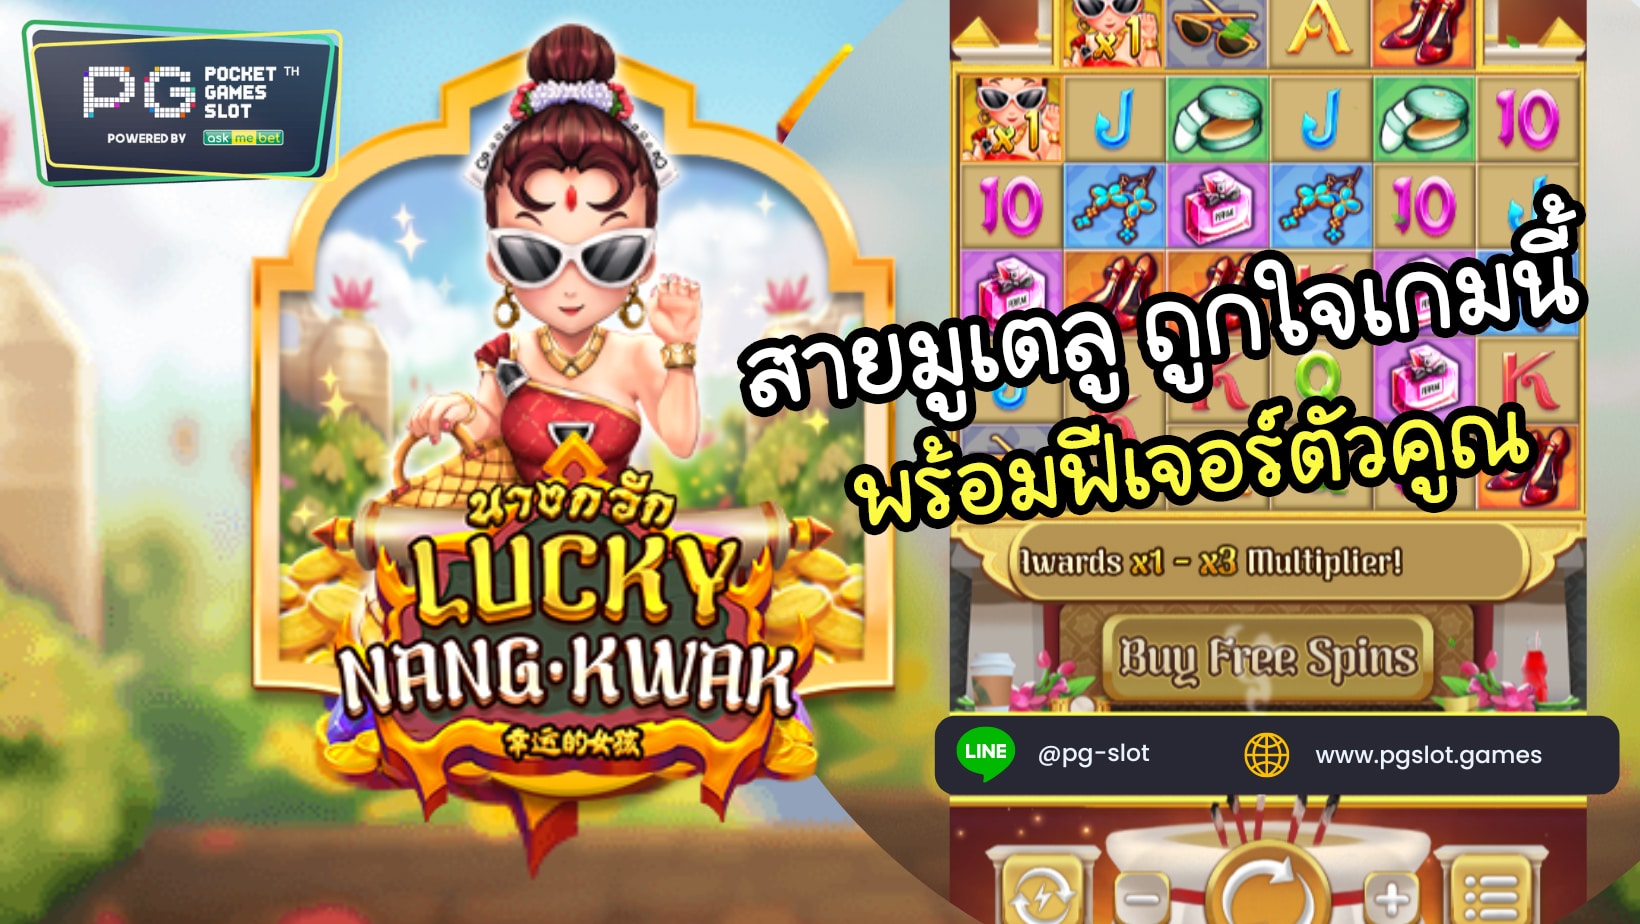 Lucky Nangkwak - pgslot